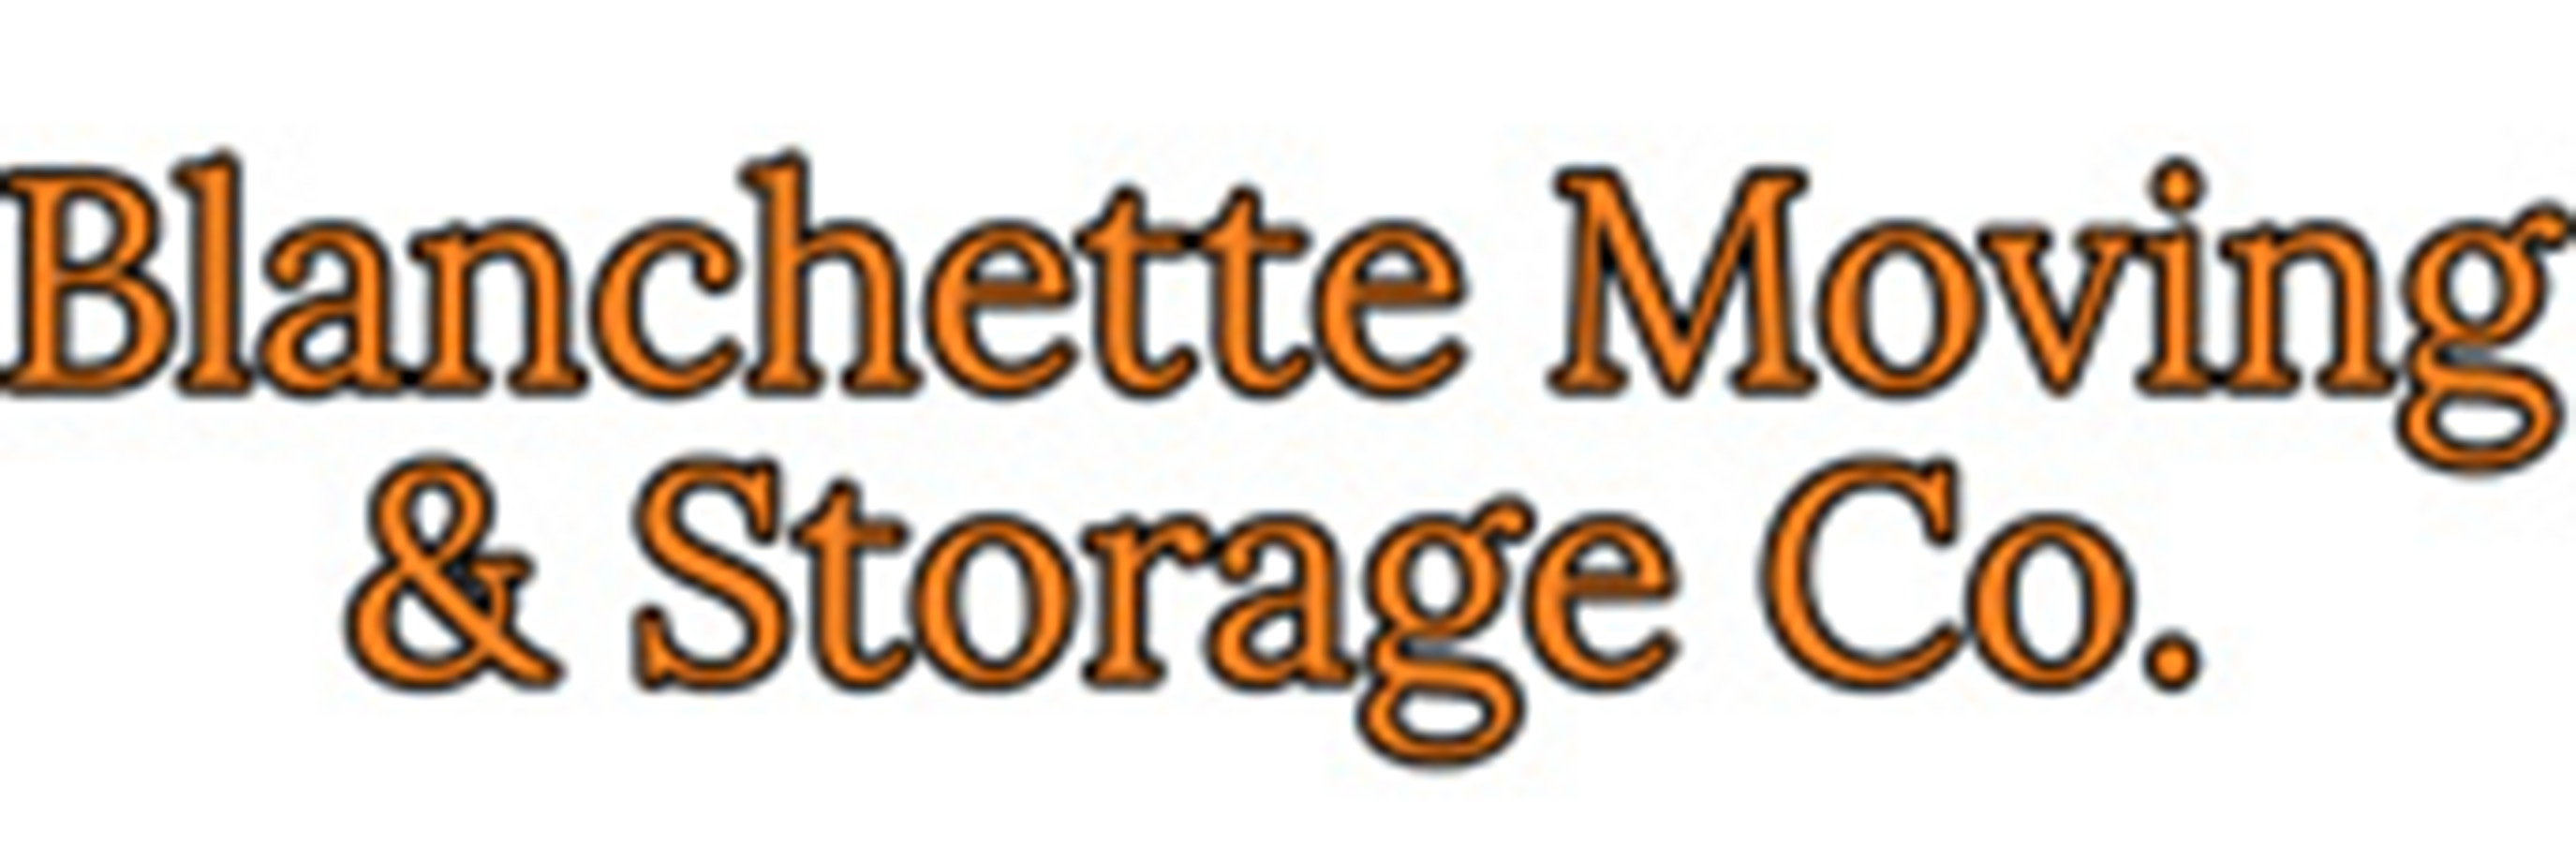 Blanchette Moving & Storage Company